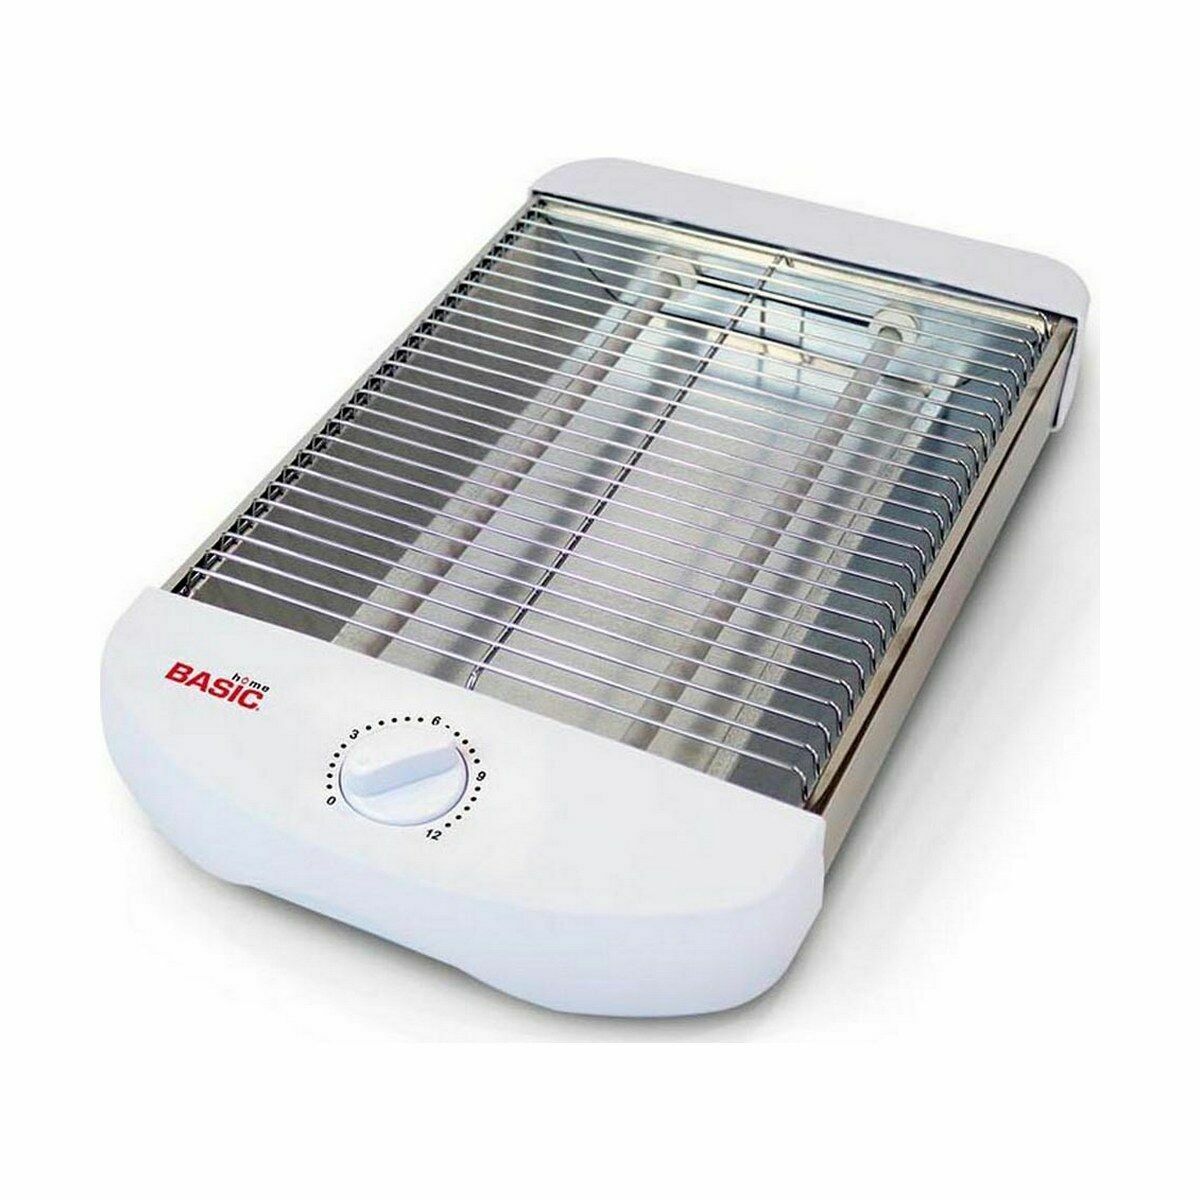 Toaster Basic Home 560 W 560 W - CA International 